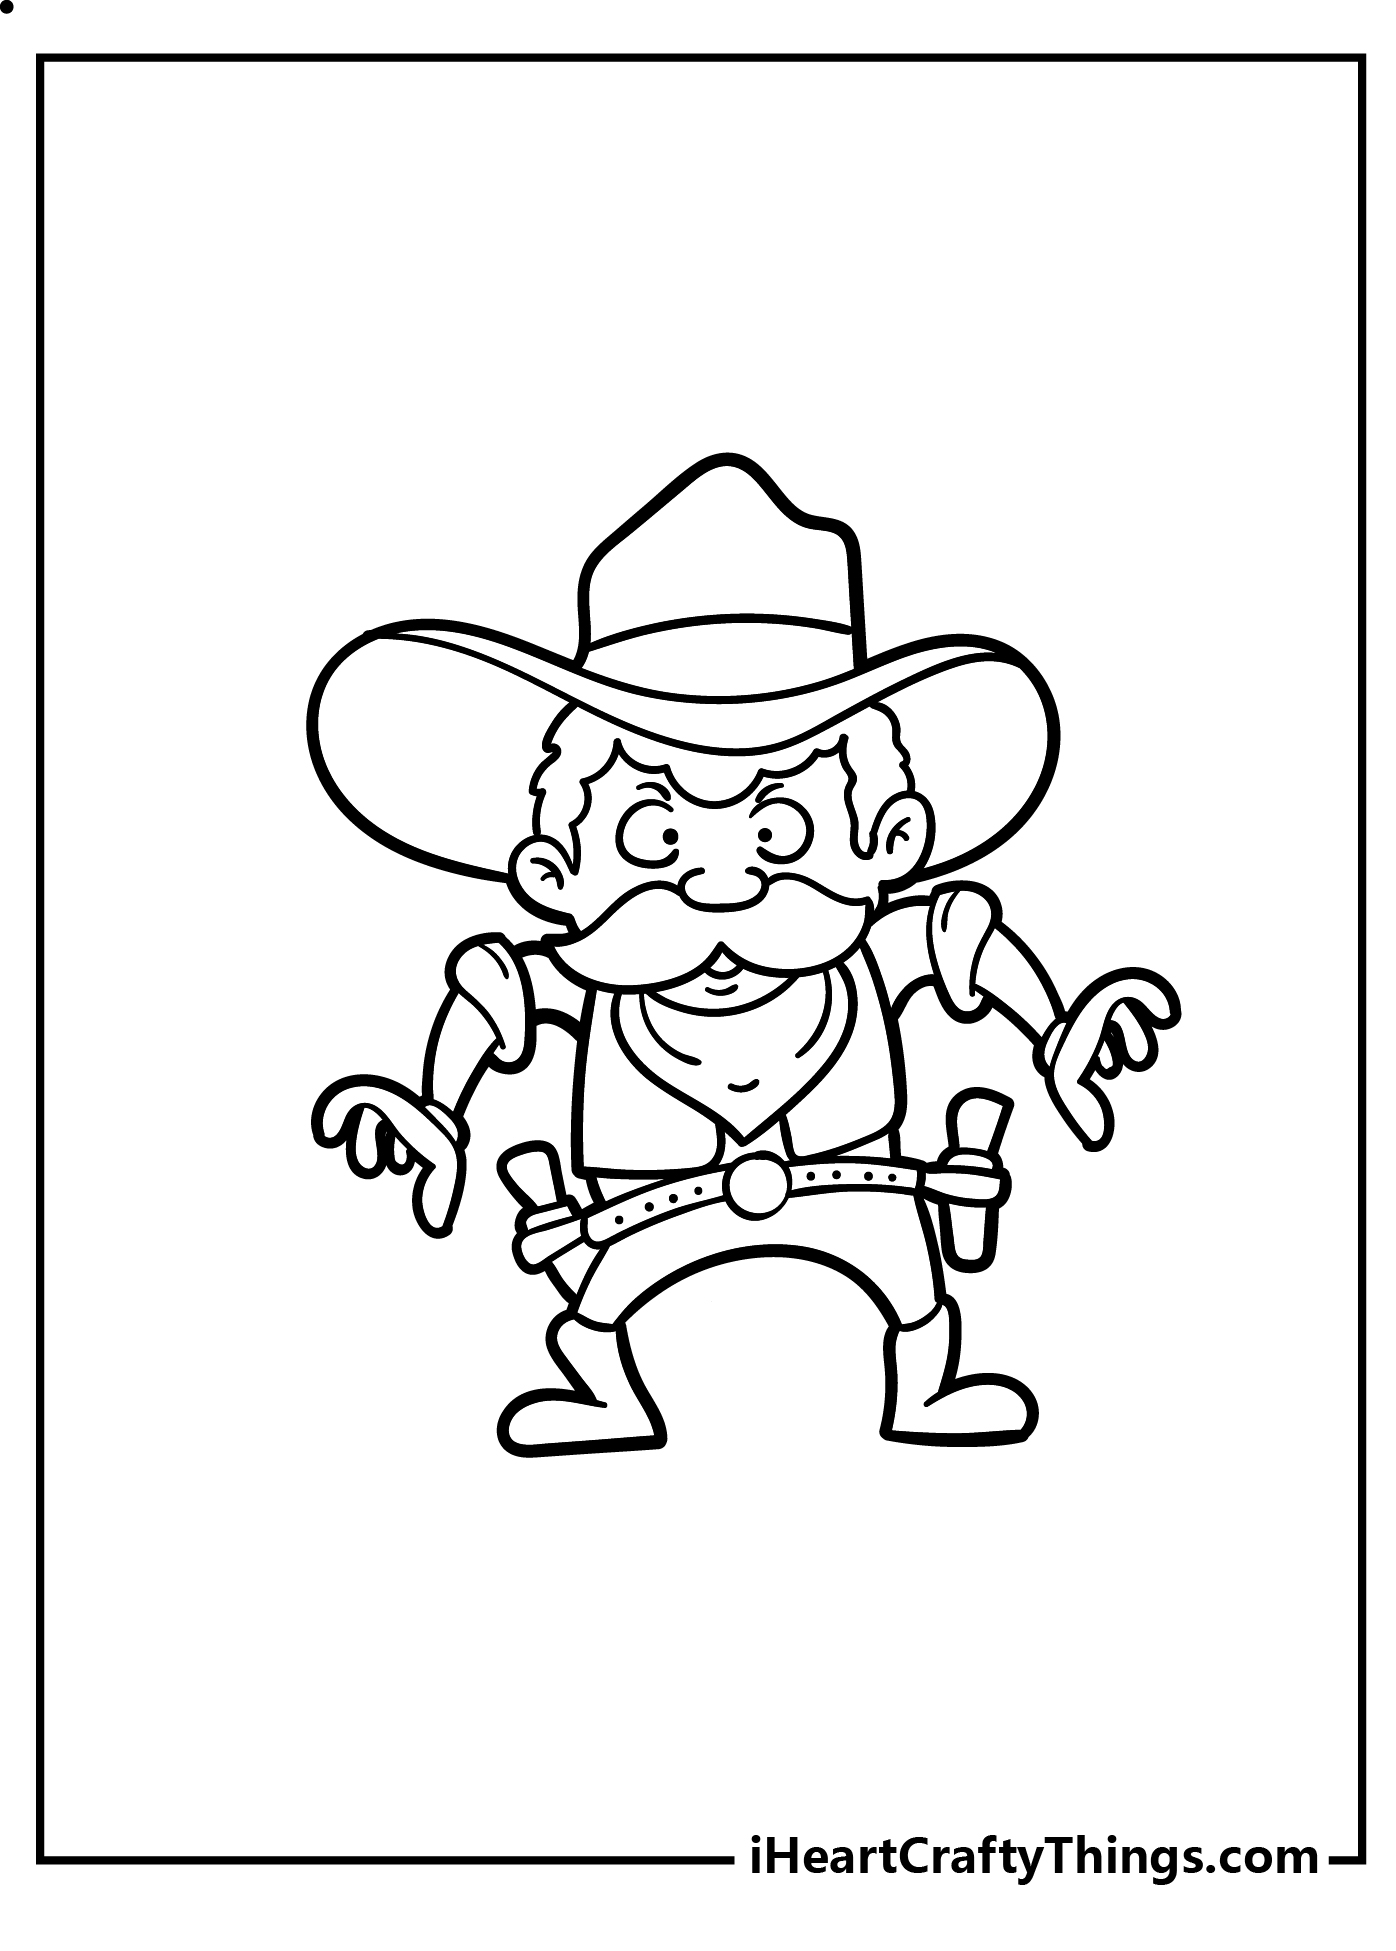 Cowboy Coloring Original Sheet for children free download